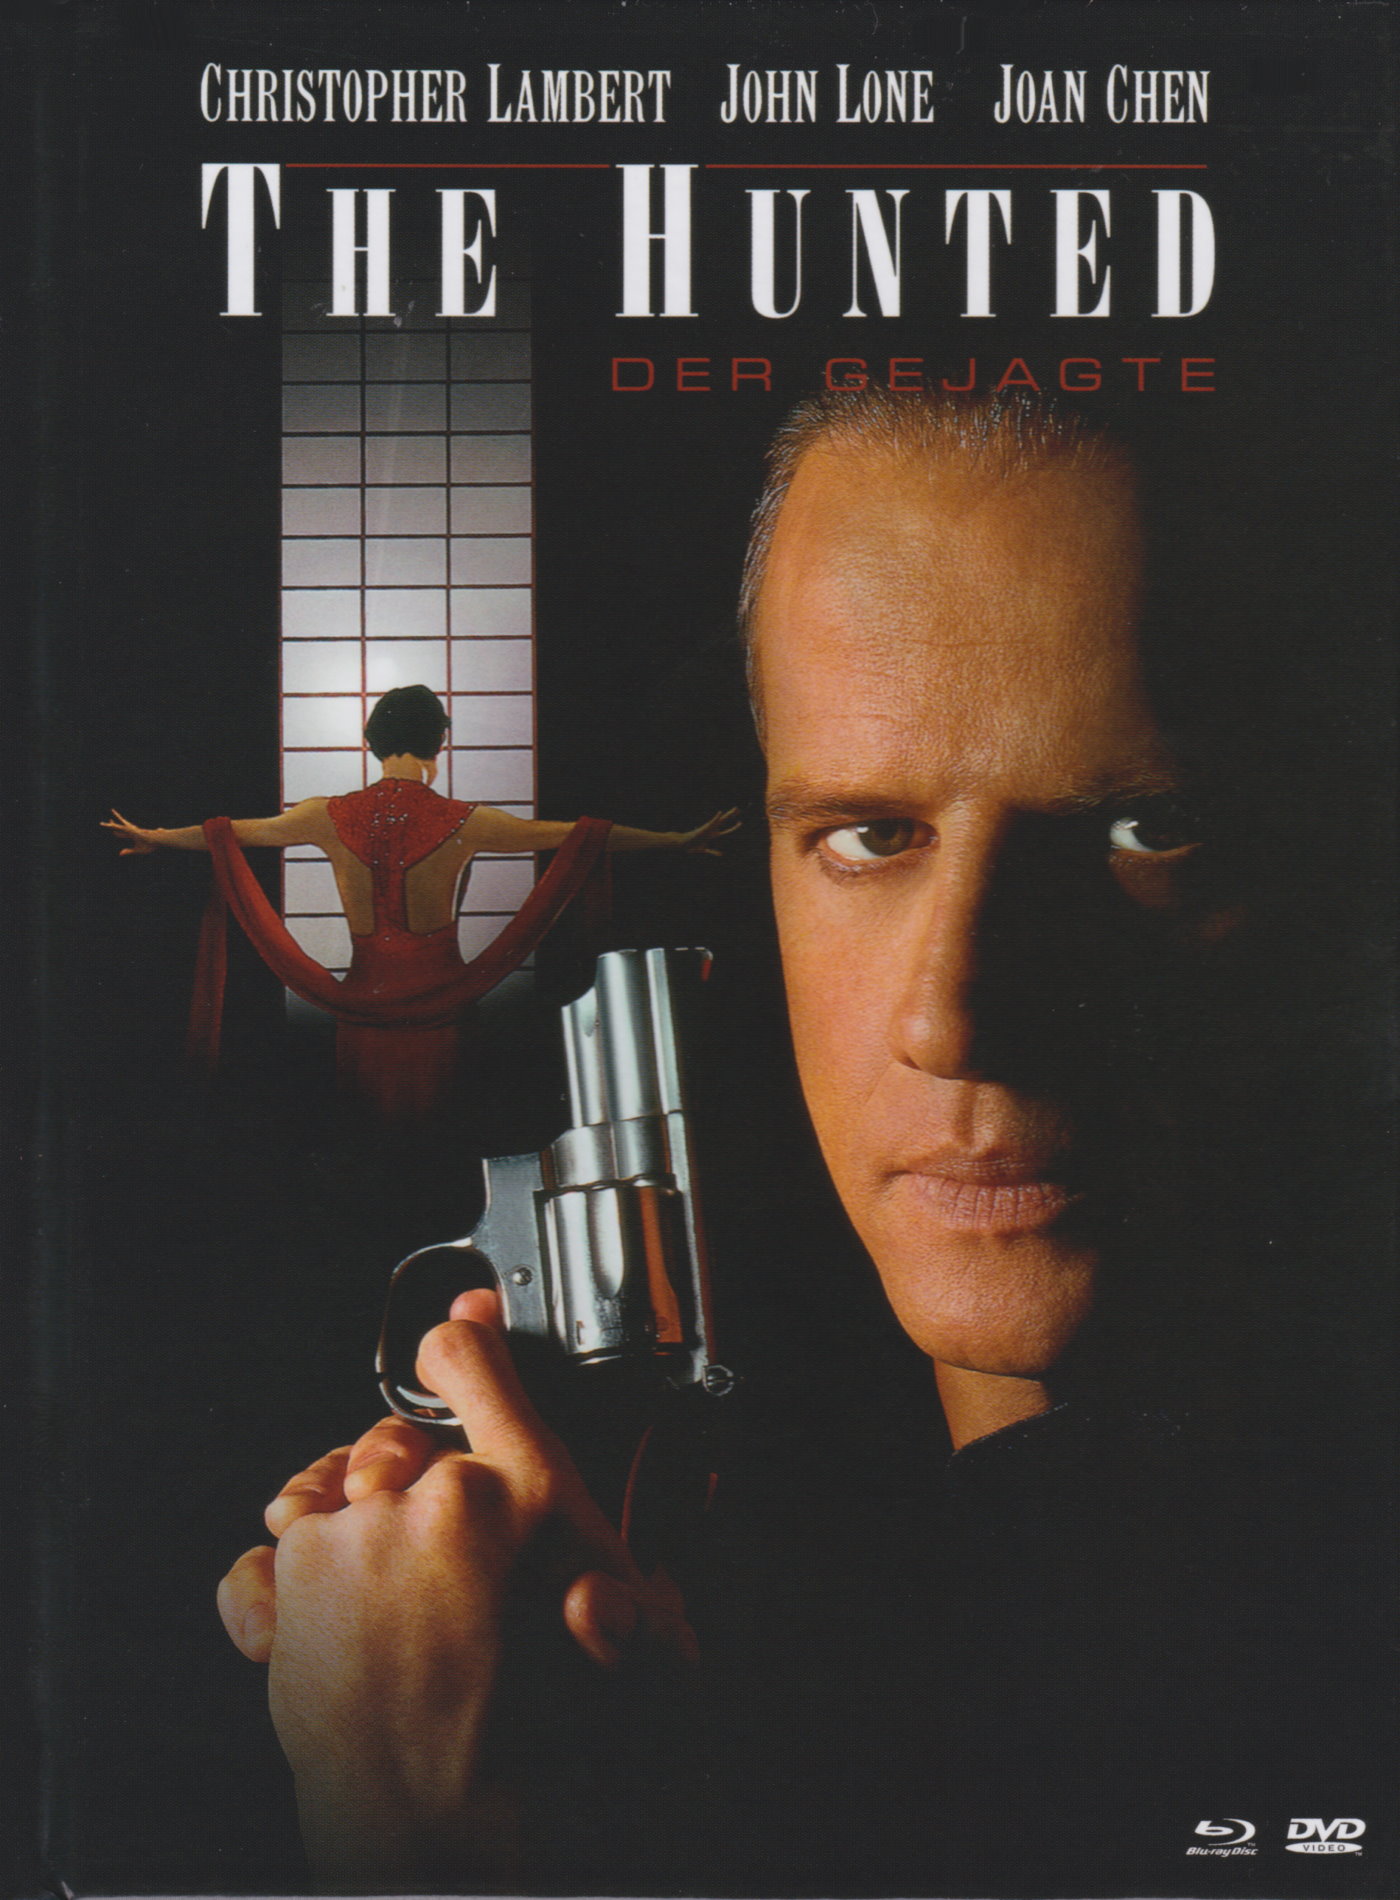 Cover - The Hunted - Der Gejagte.jpg